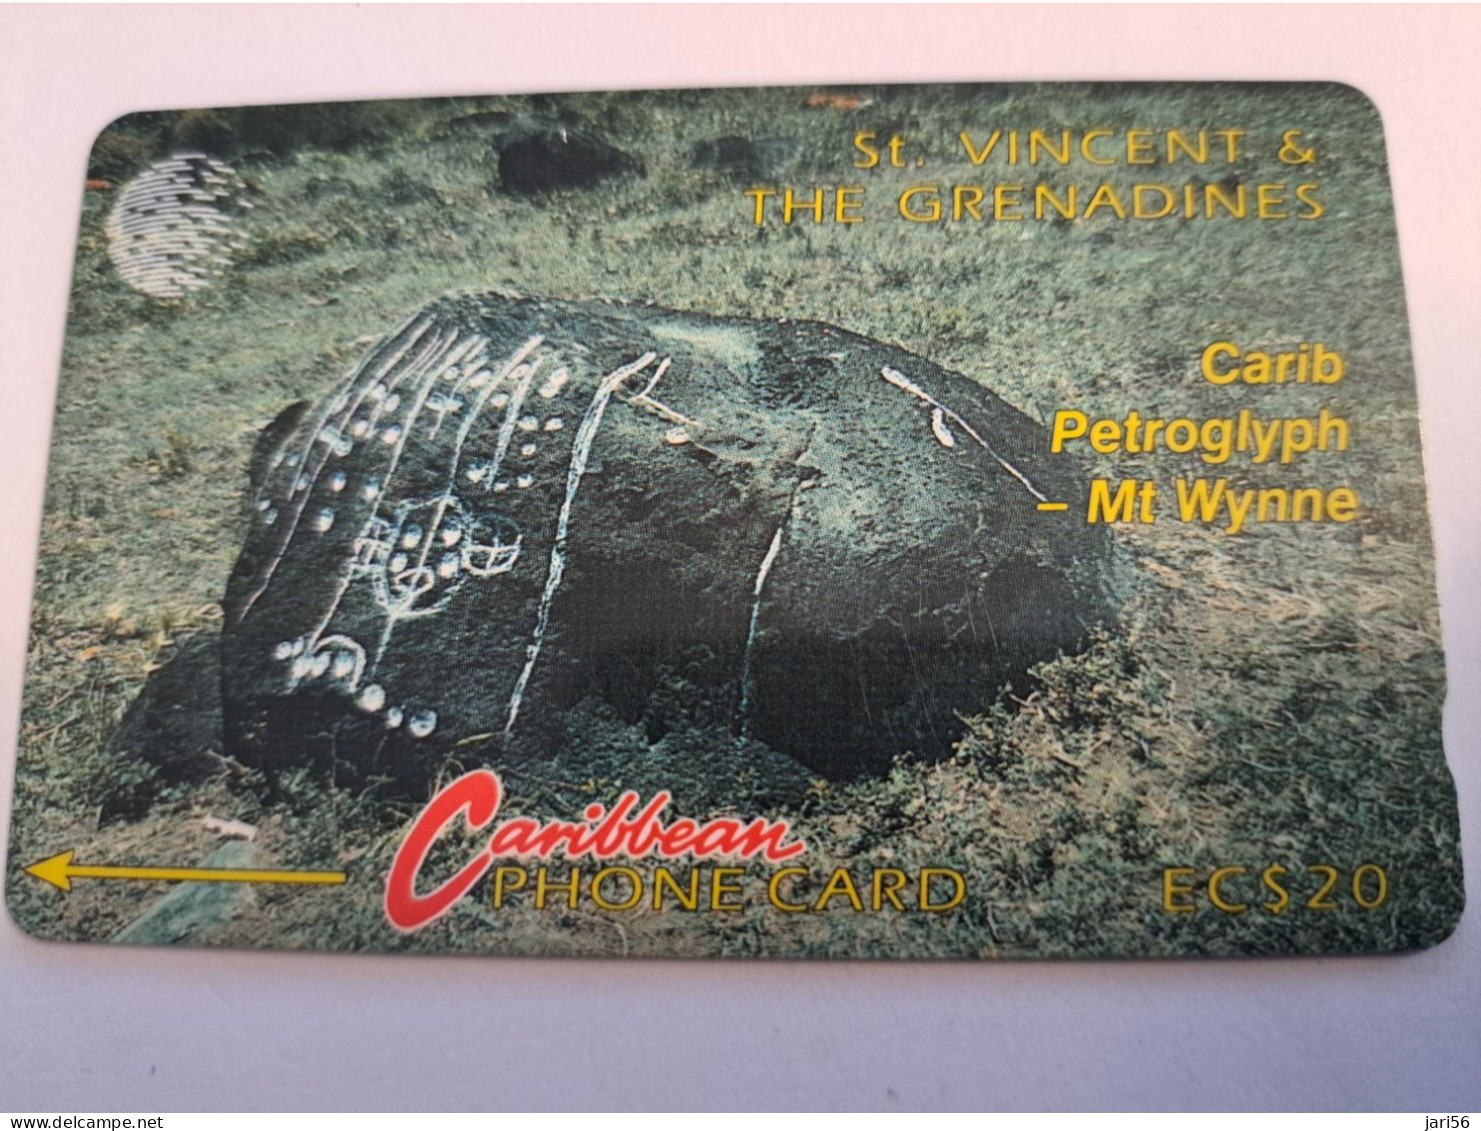 ST VINCENT & GRENADINES  GPT CARD   $ 20,-  5CSVB  CARIB PETROGLYPH     C&W    Fine Used  Card  **16052 ** - St. Vincent & The Grenadines